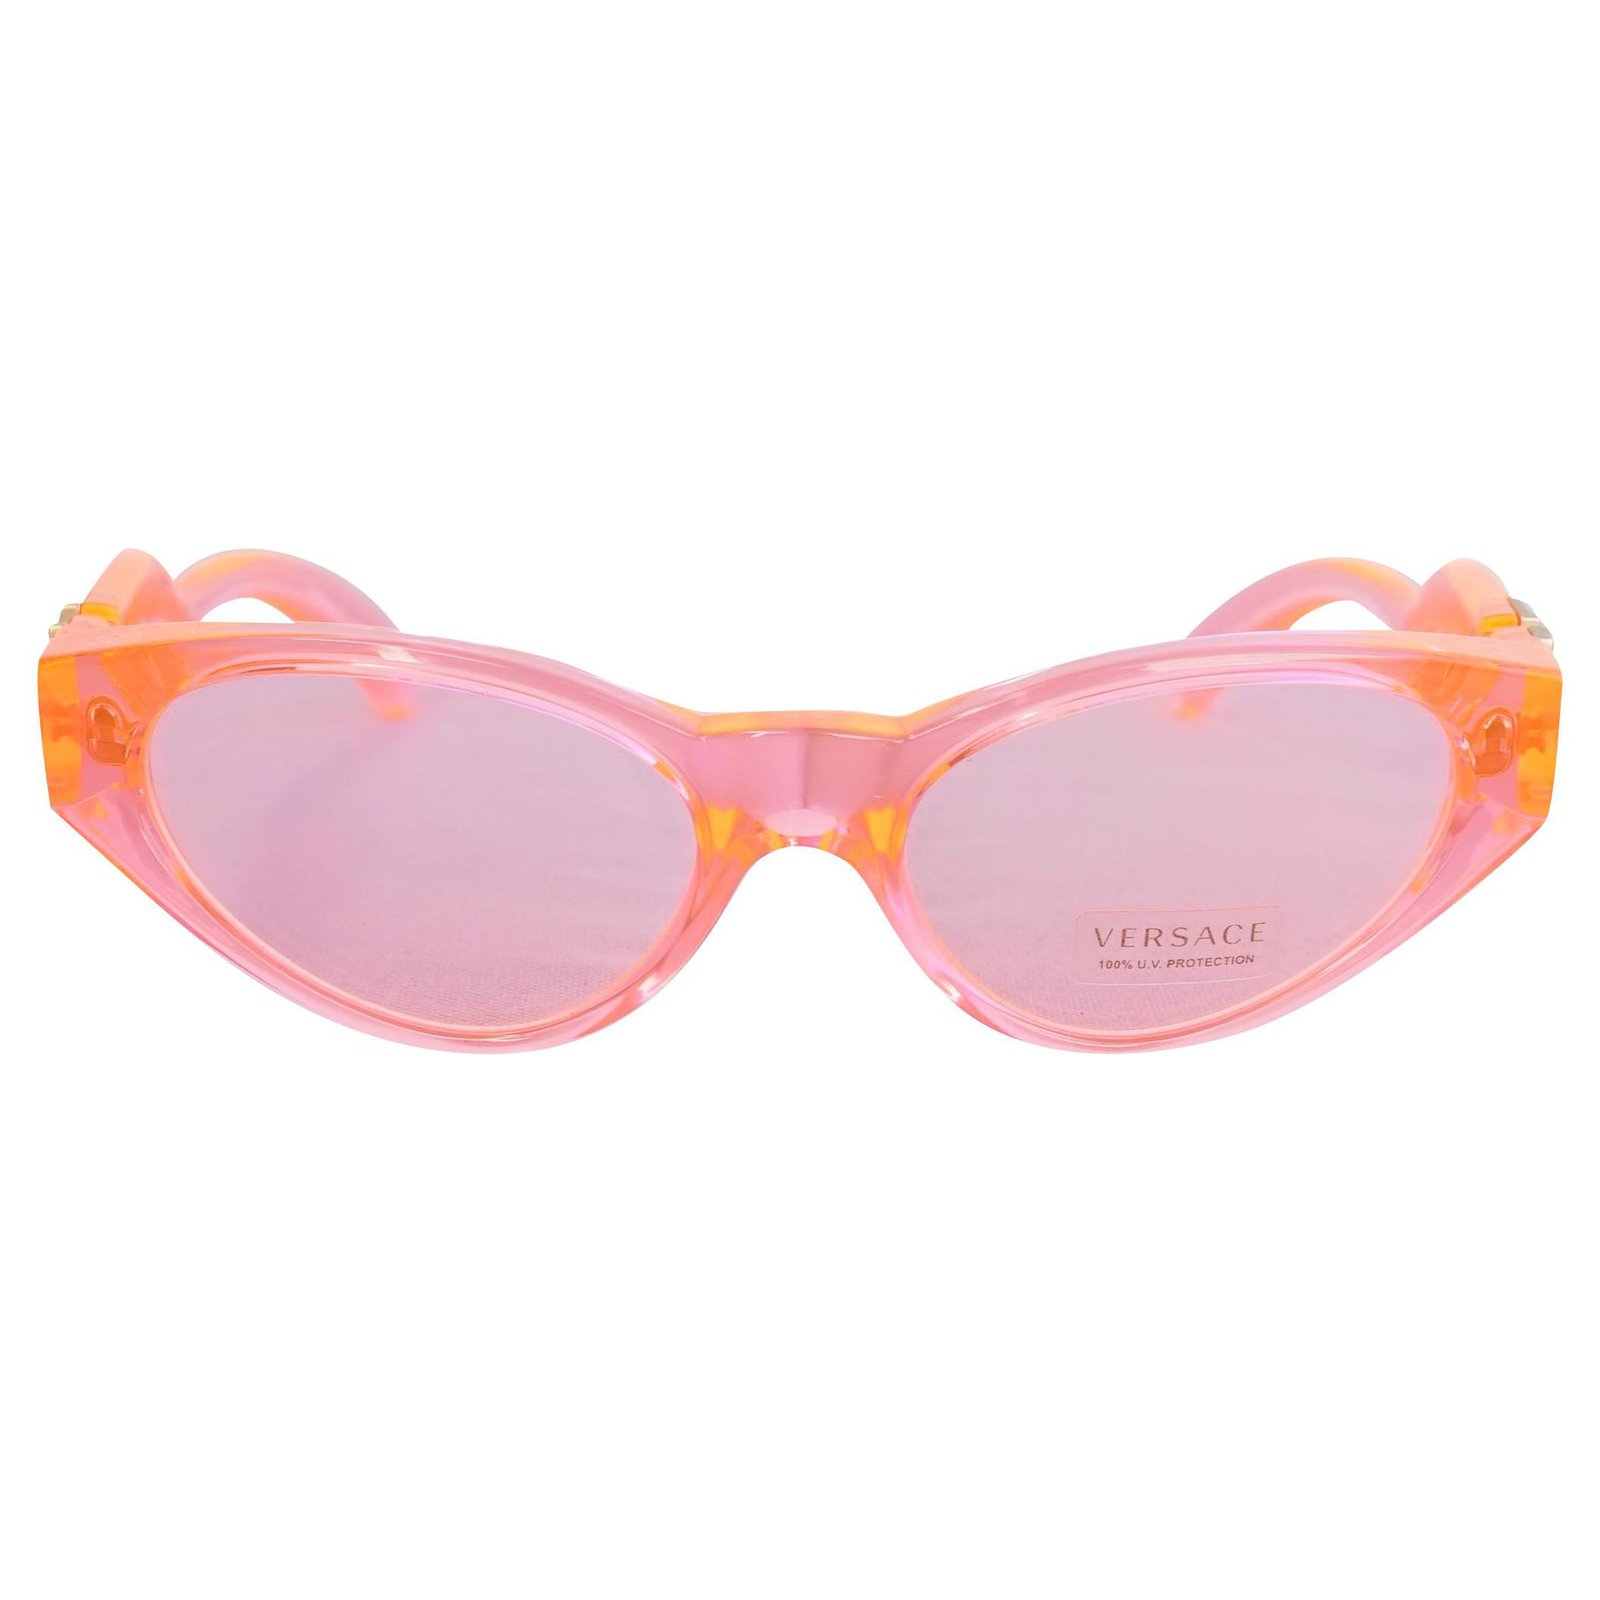 versace pink sunglasses